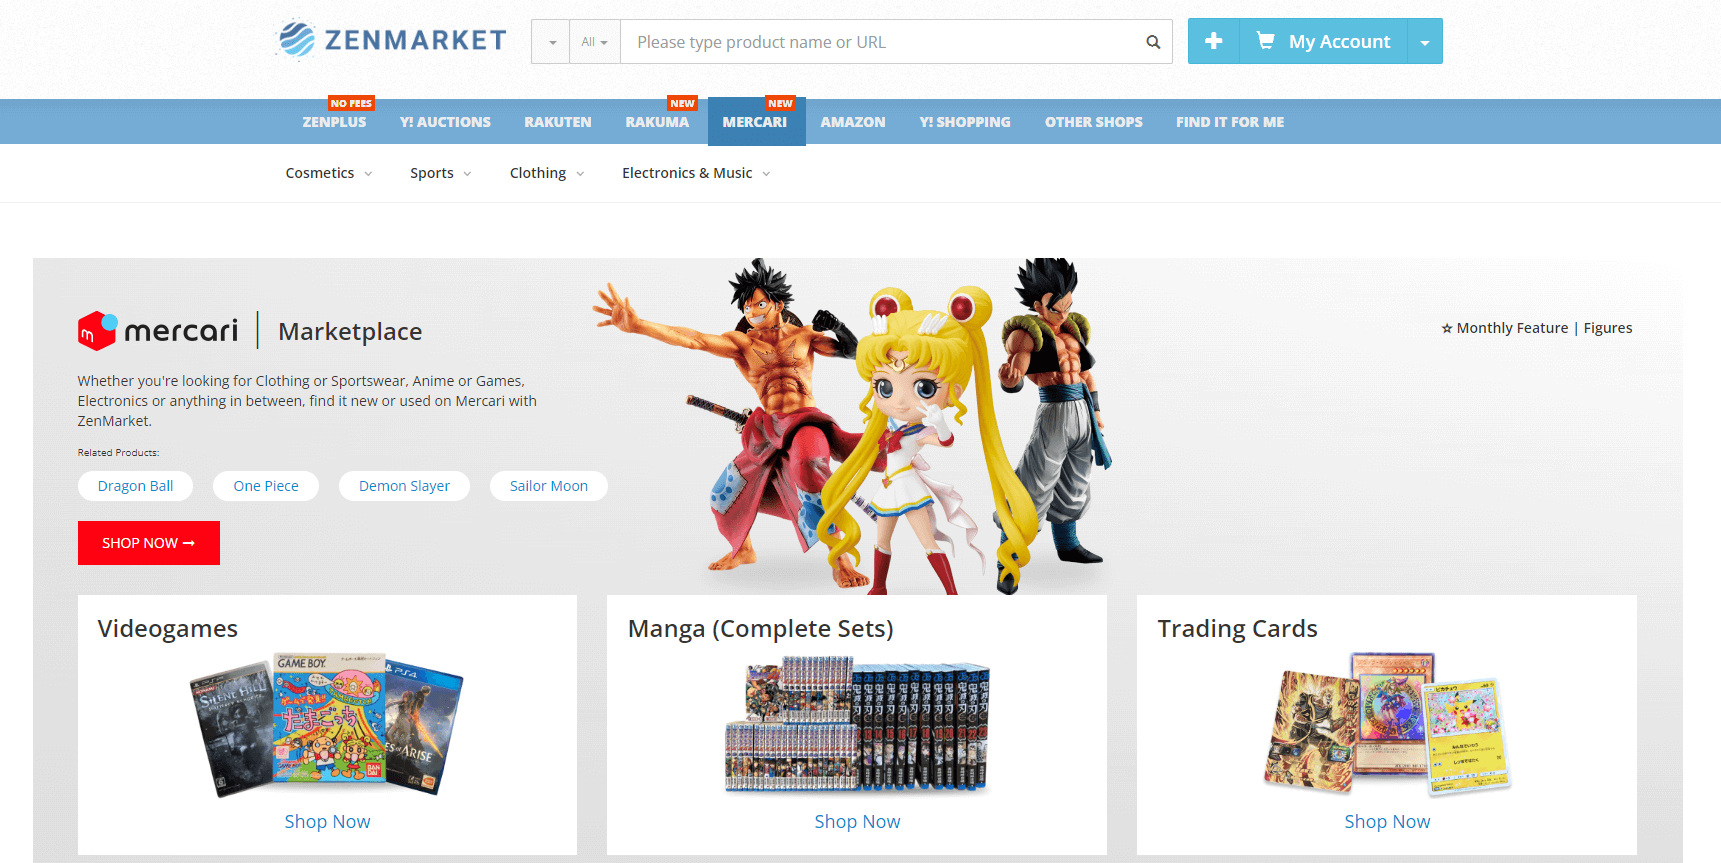 ZenMarket's Mercari page